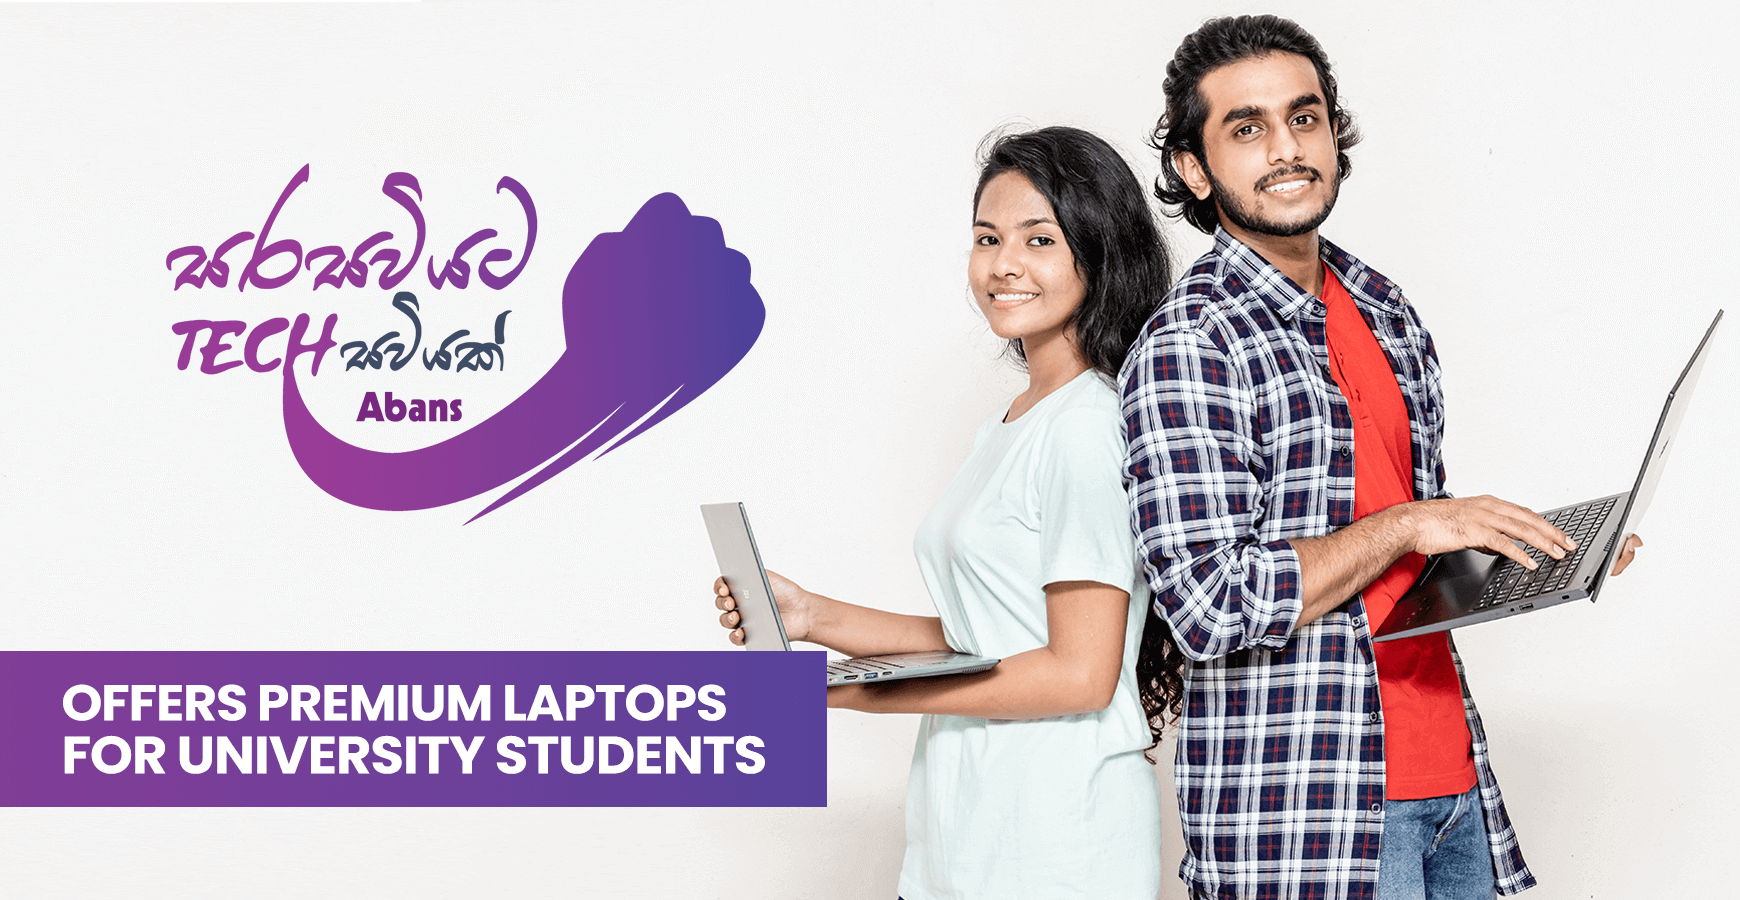 “Sarasaviyata Tech Saviyak” offers Premium Laptops for University Students